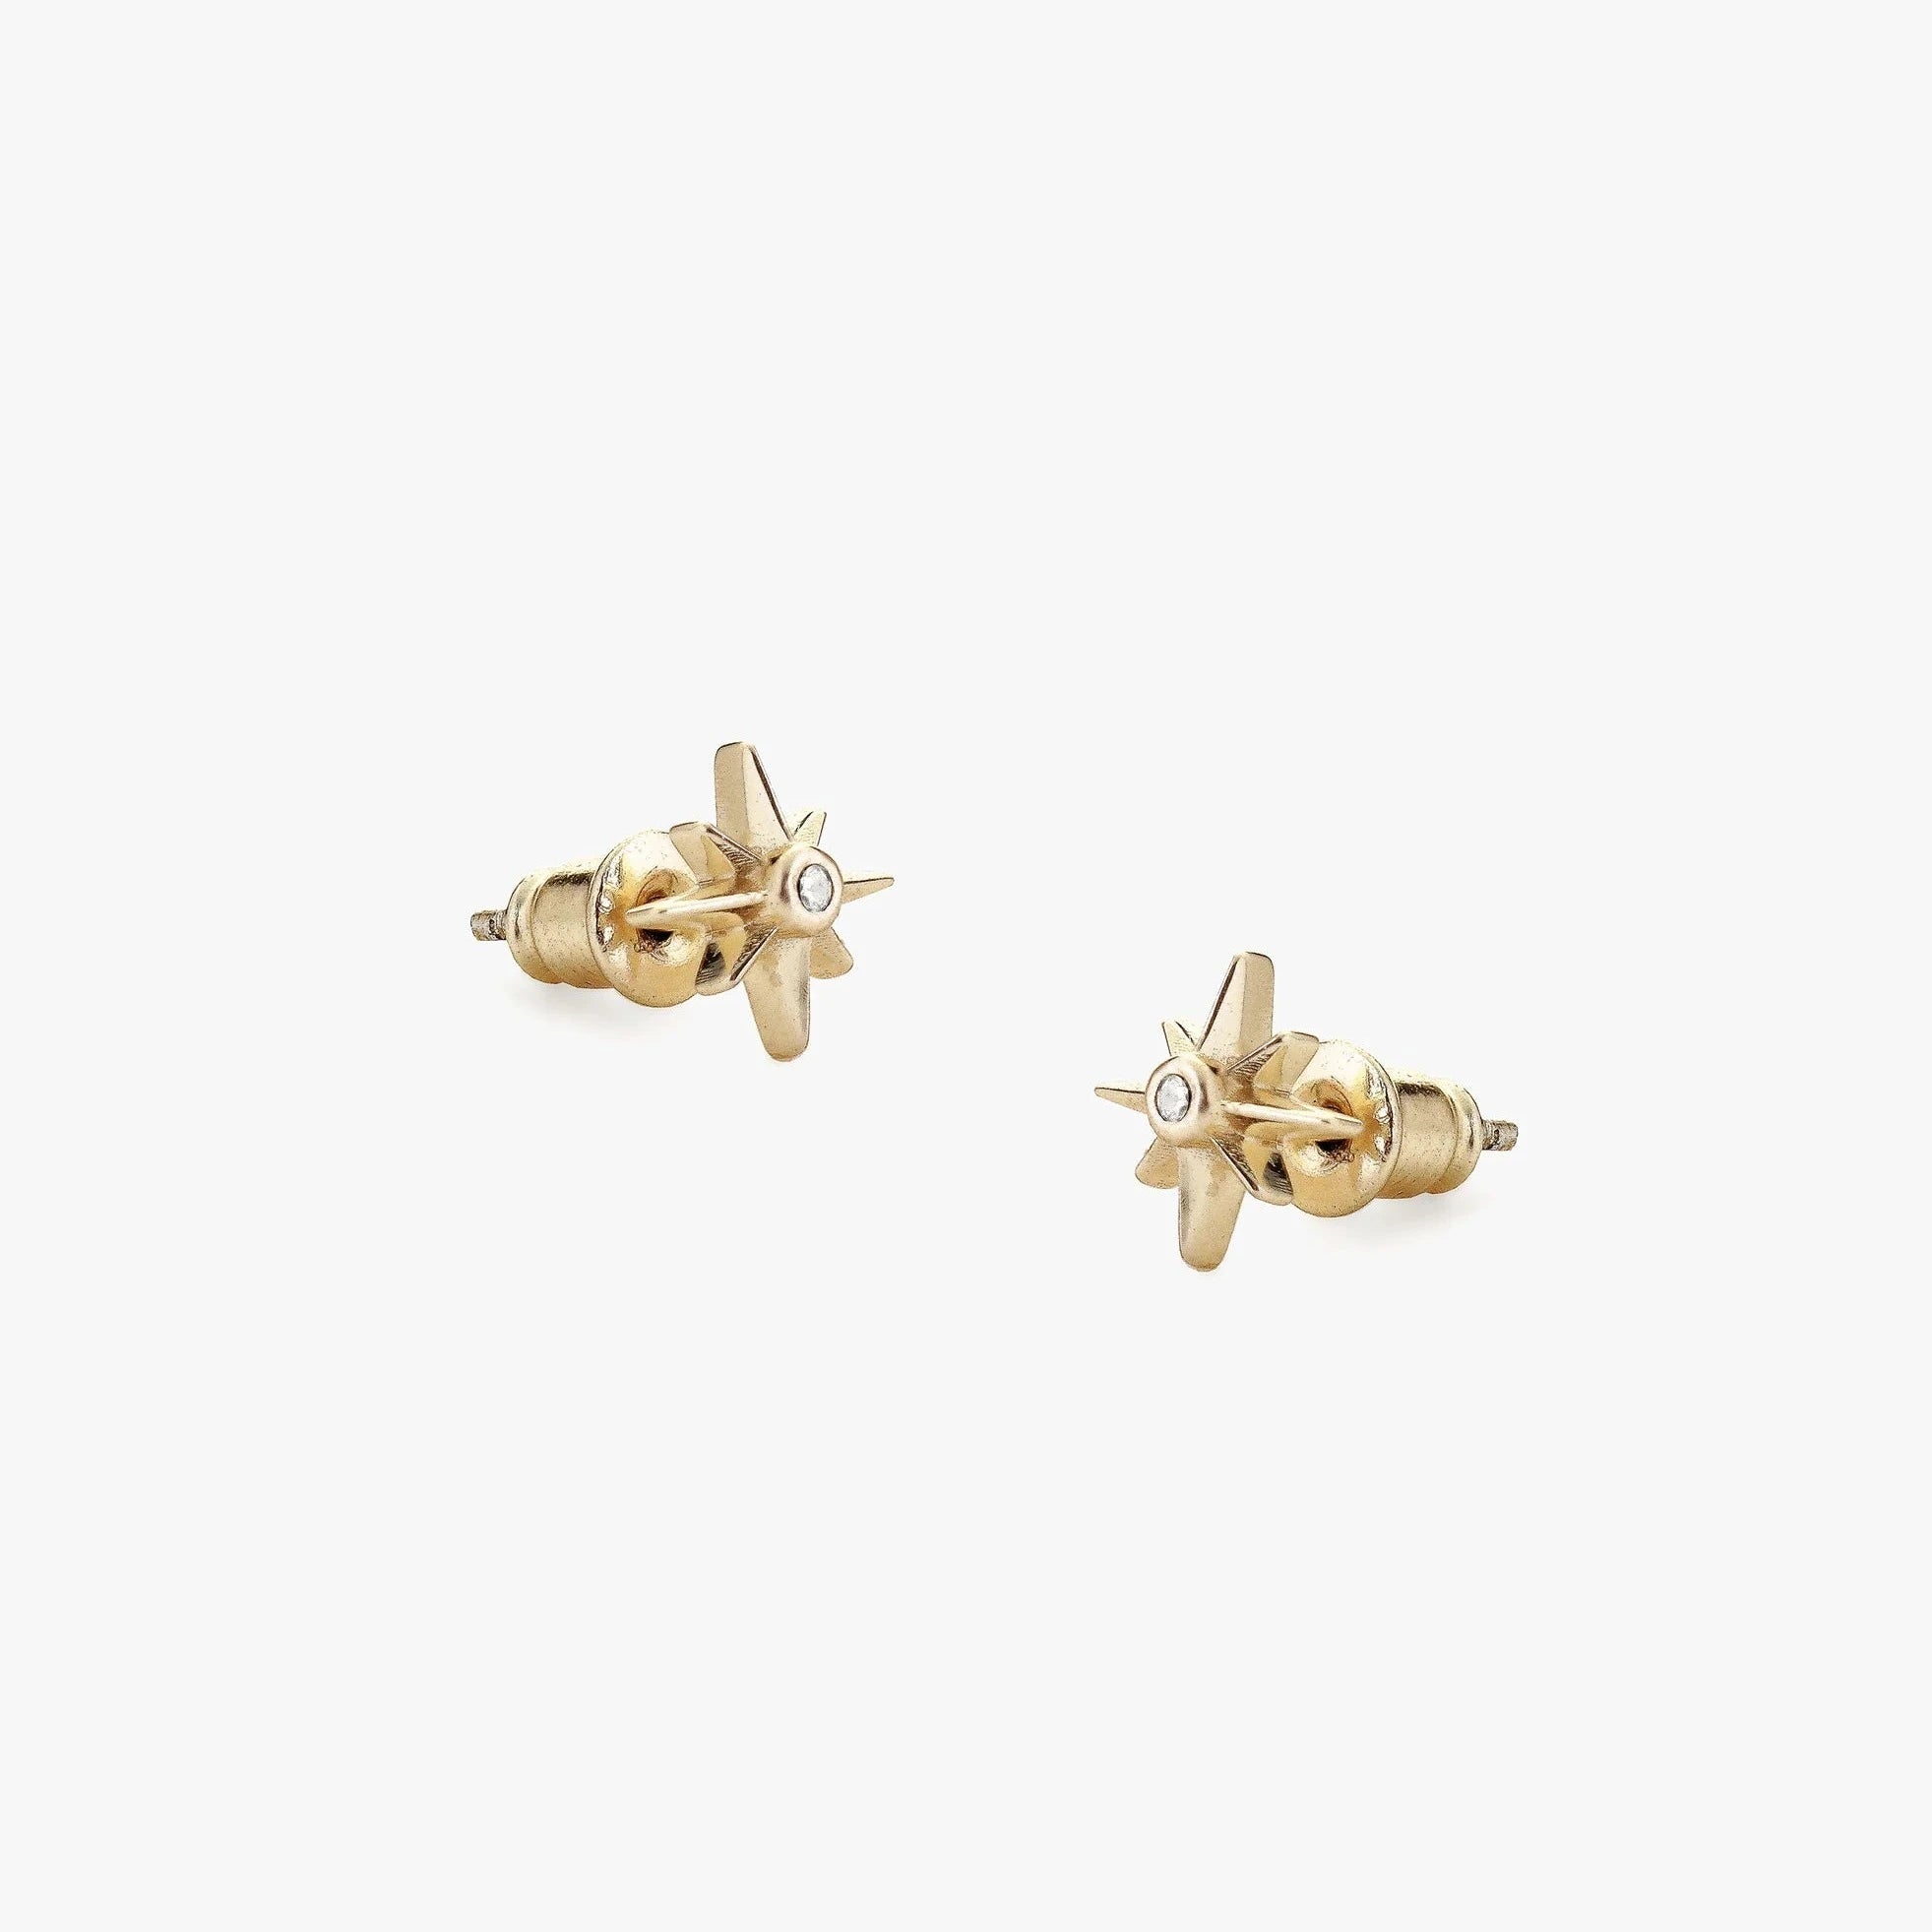 Chance Earrings Gold - The Nancy Smillie Shop - Art, Jewellery & Designer Gifts Glasgow